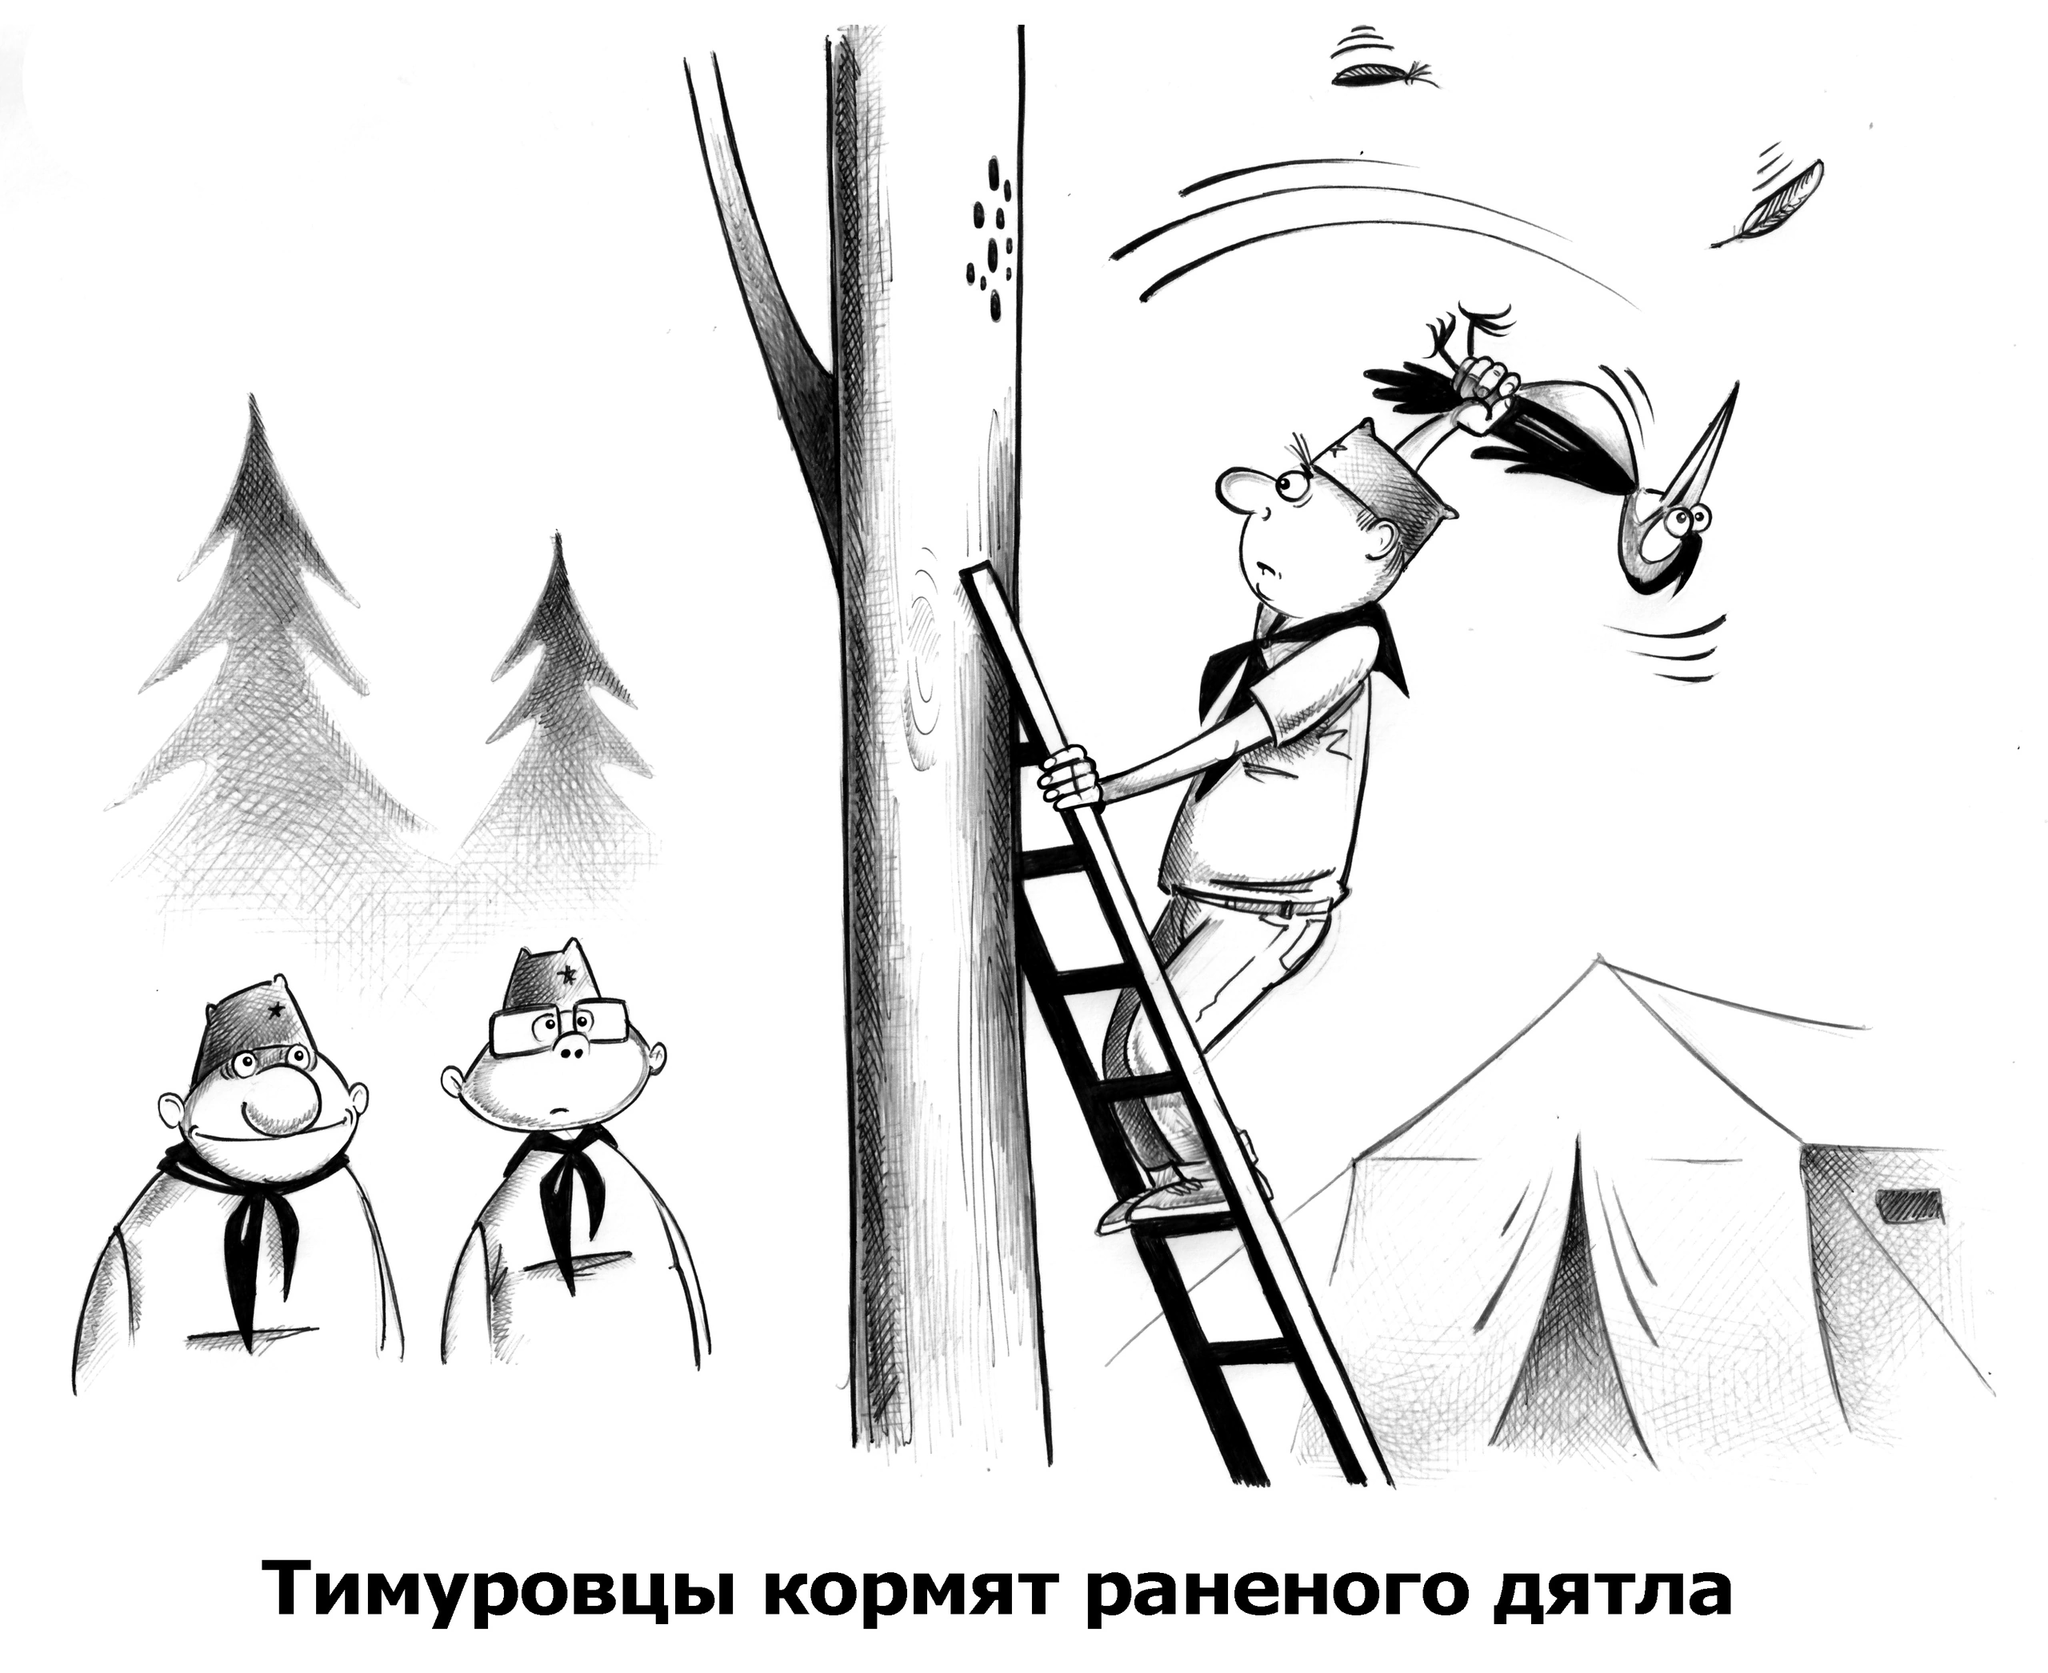 Timurovites - My, Sergey Korsun, Caricature, Pen drawing, Timurovites, Woodpeckers, Good deeds, Black humor